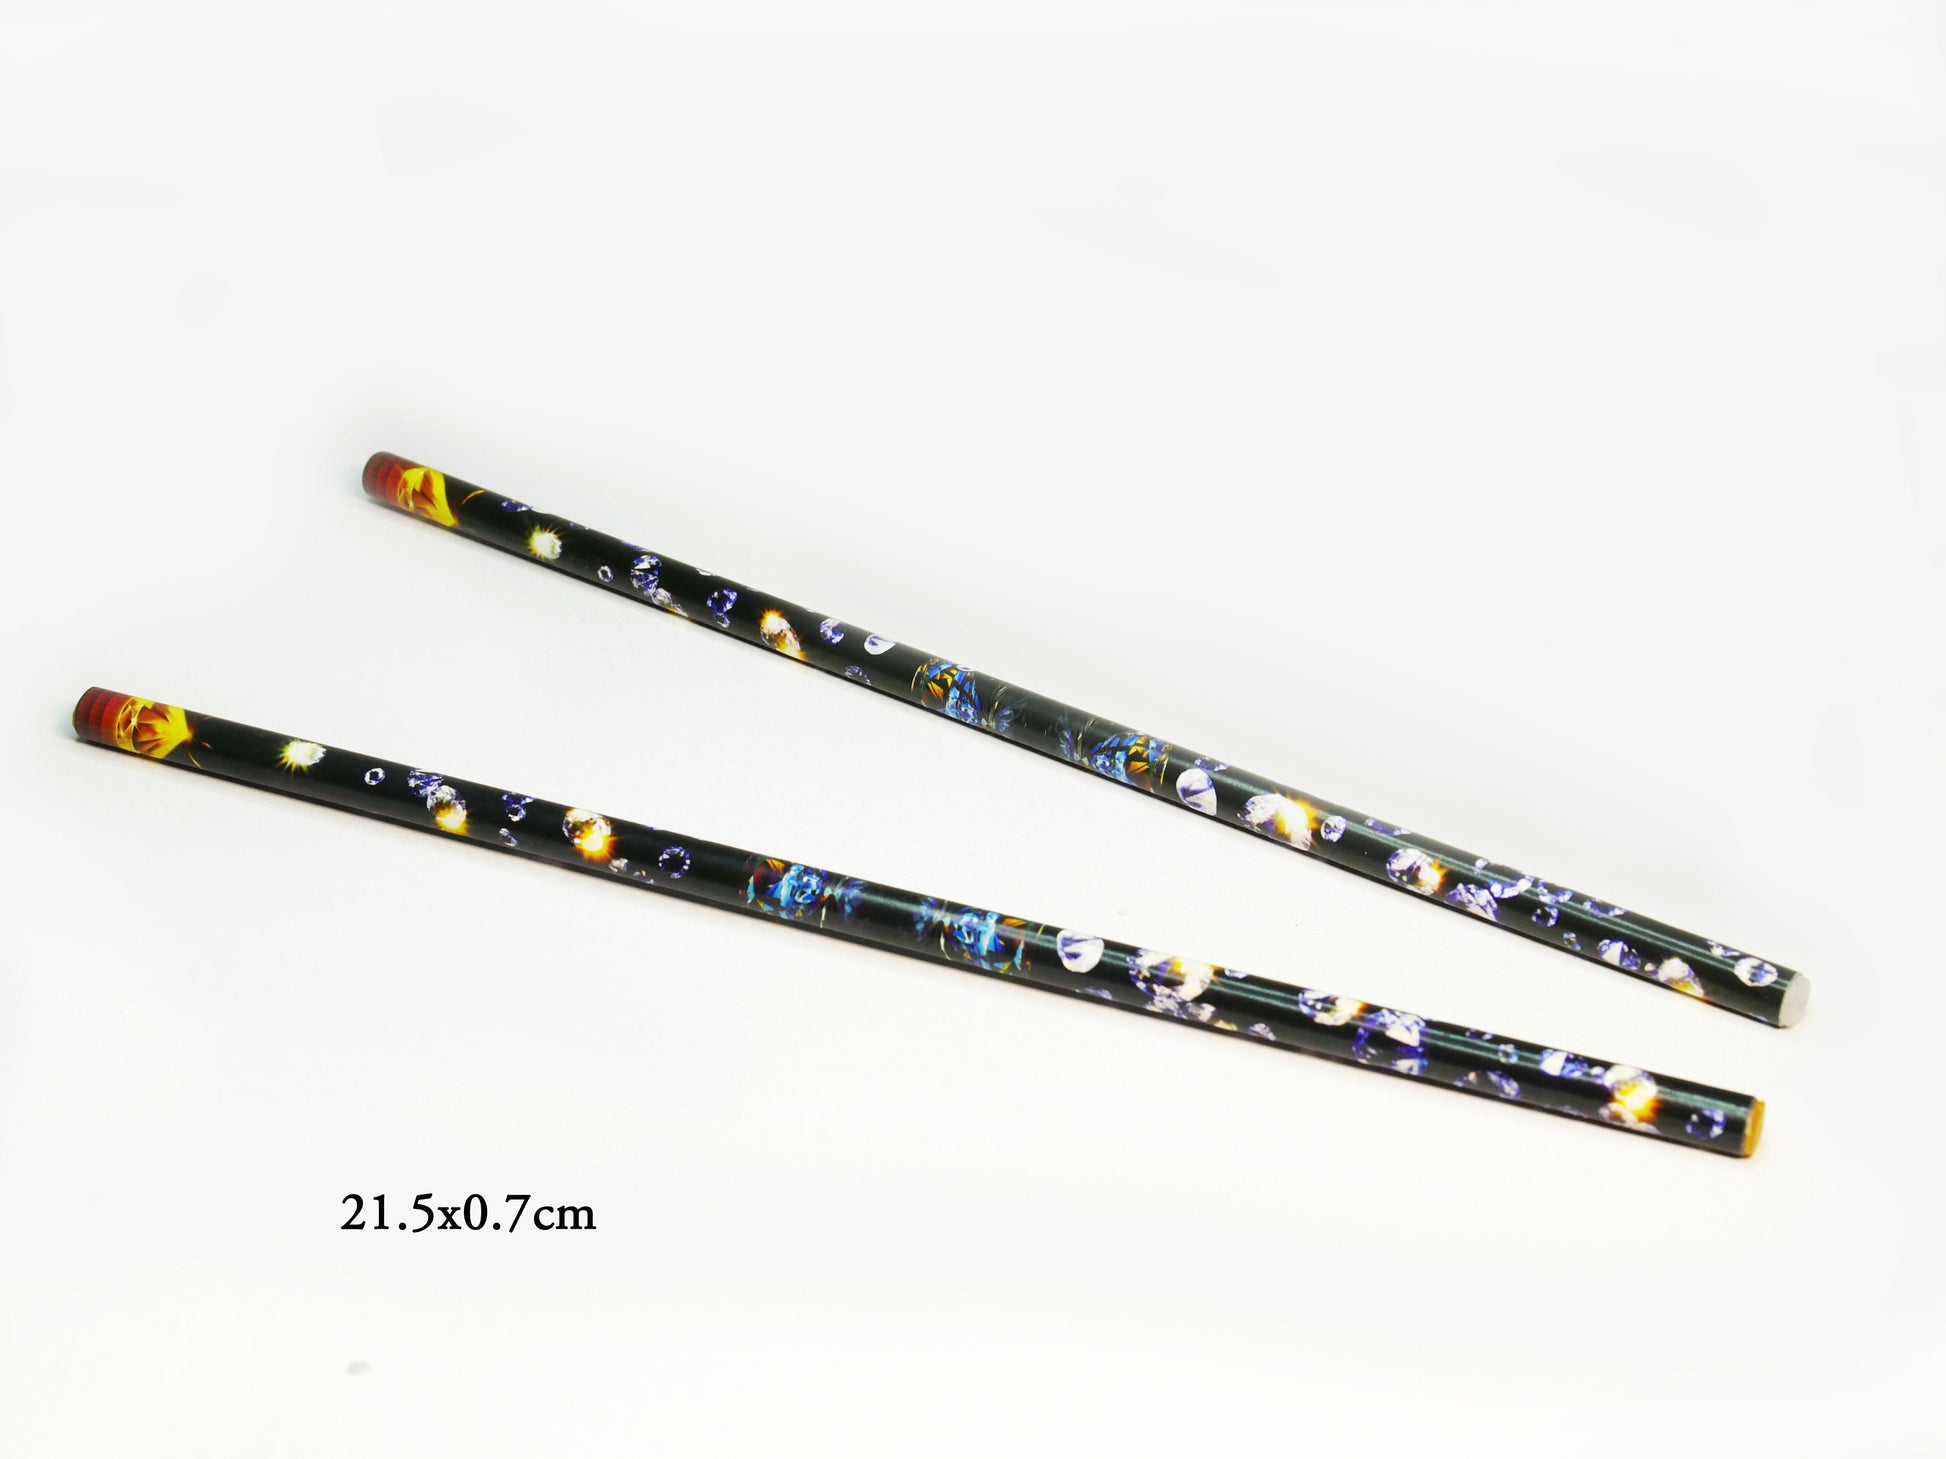 Sindy Nail Art Picker Resin Pencil Rhinestones Dotting Pick up Tool Wax Pen  10Pcs